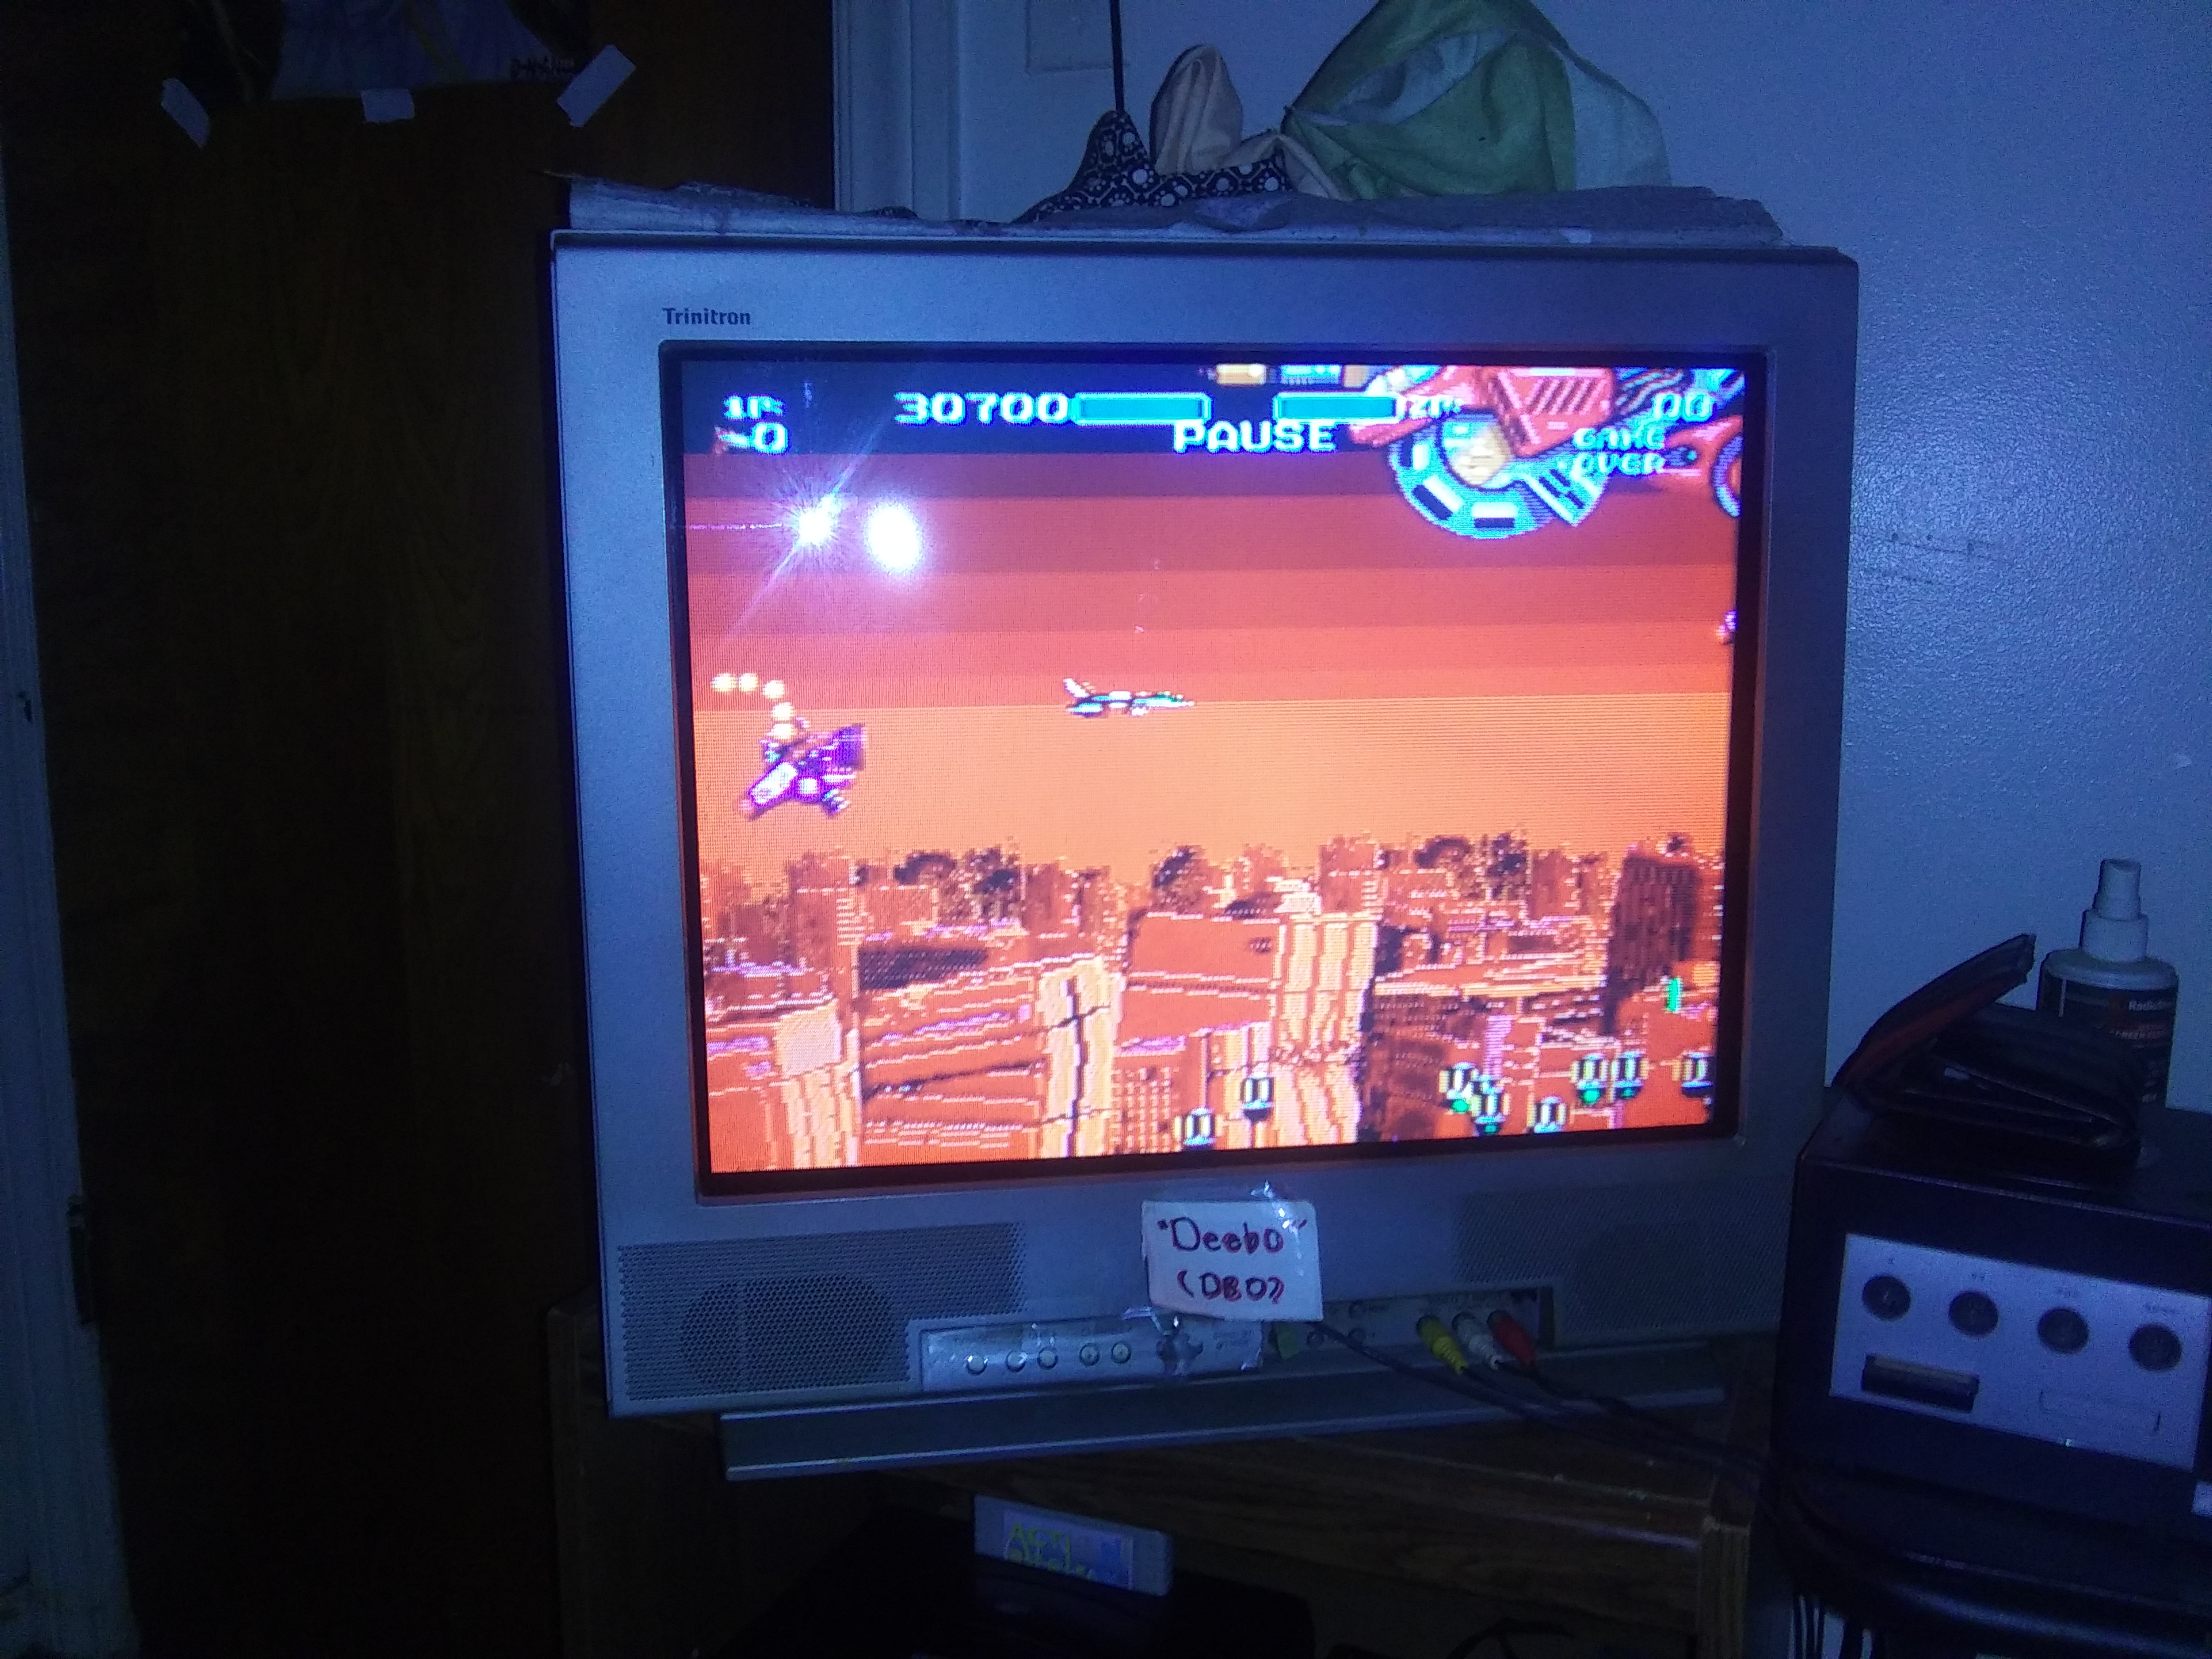 Deebo: Air Buster [Hard] (Sega Genesis / MegaDrive) 30,700 points on 2019-07-16 23:22:19